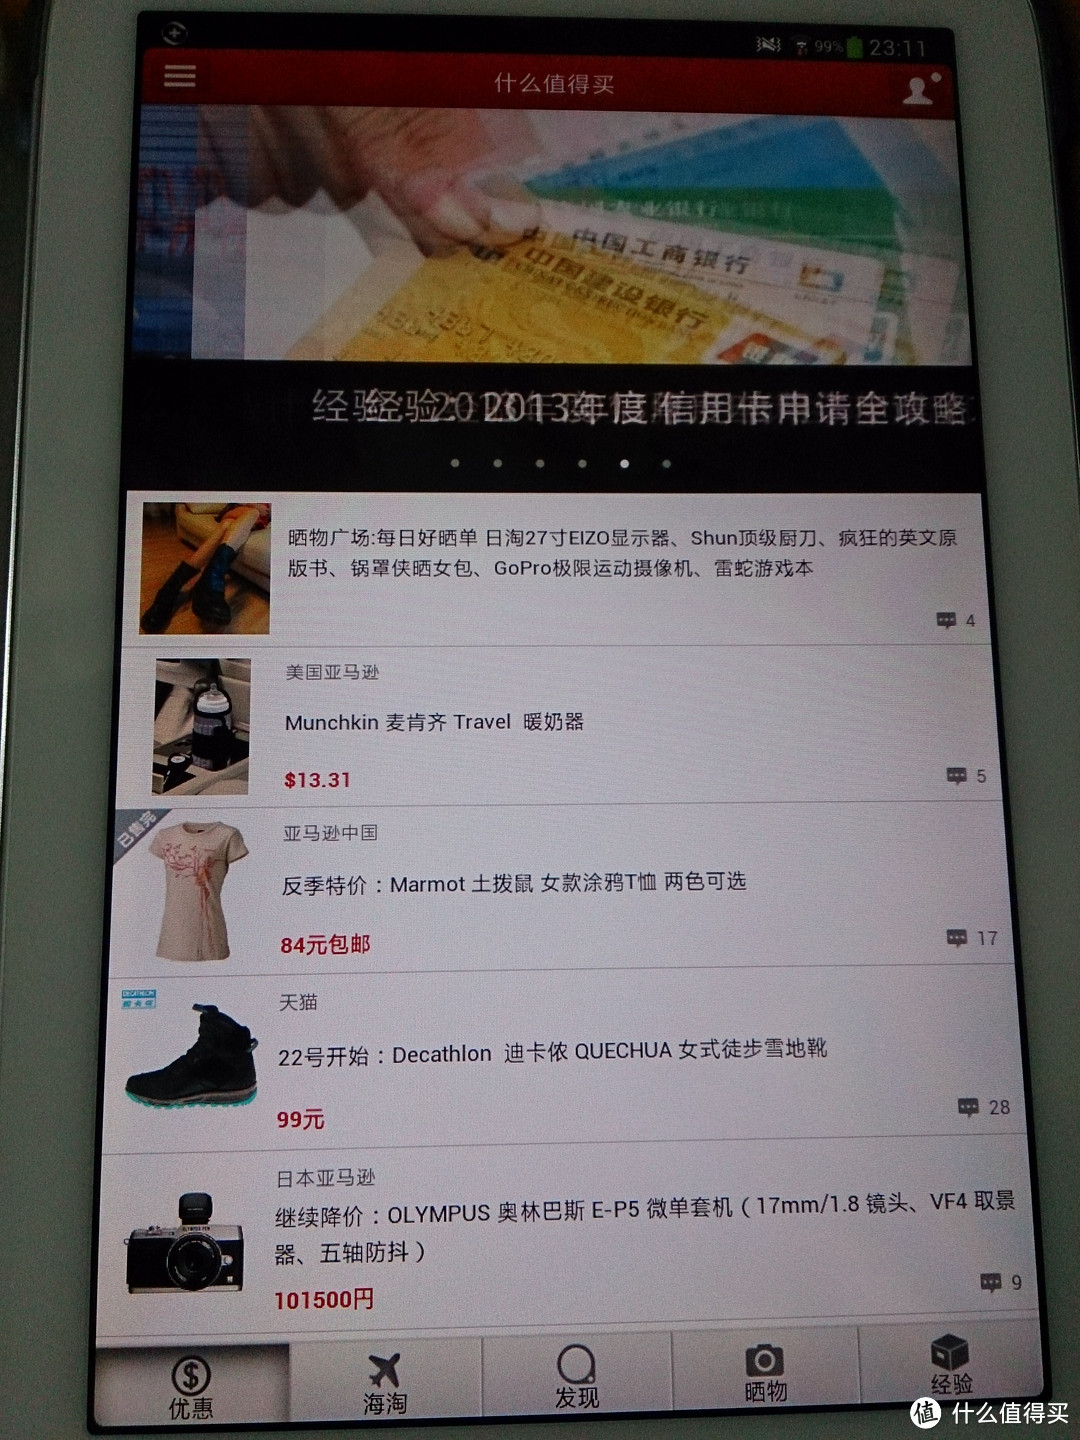 Samsung 三星 Galaxy Note 8.0 3G版 N5100 平板电脑 + Verso kindle 皮套